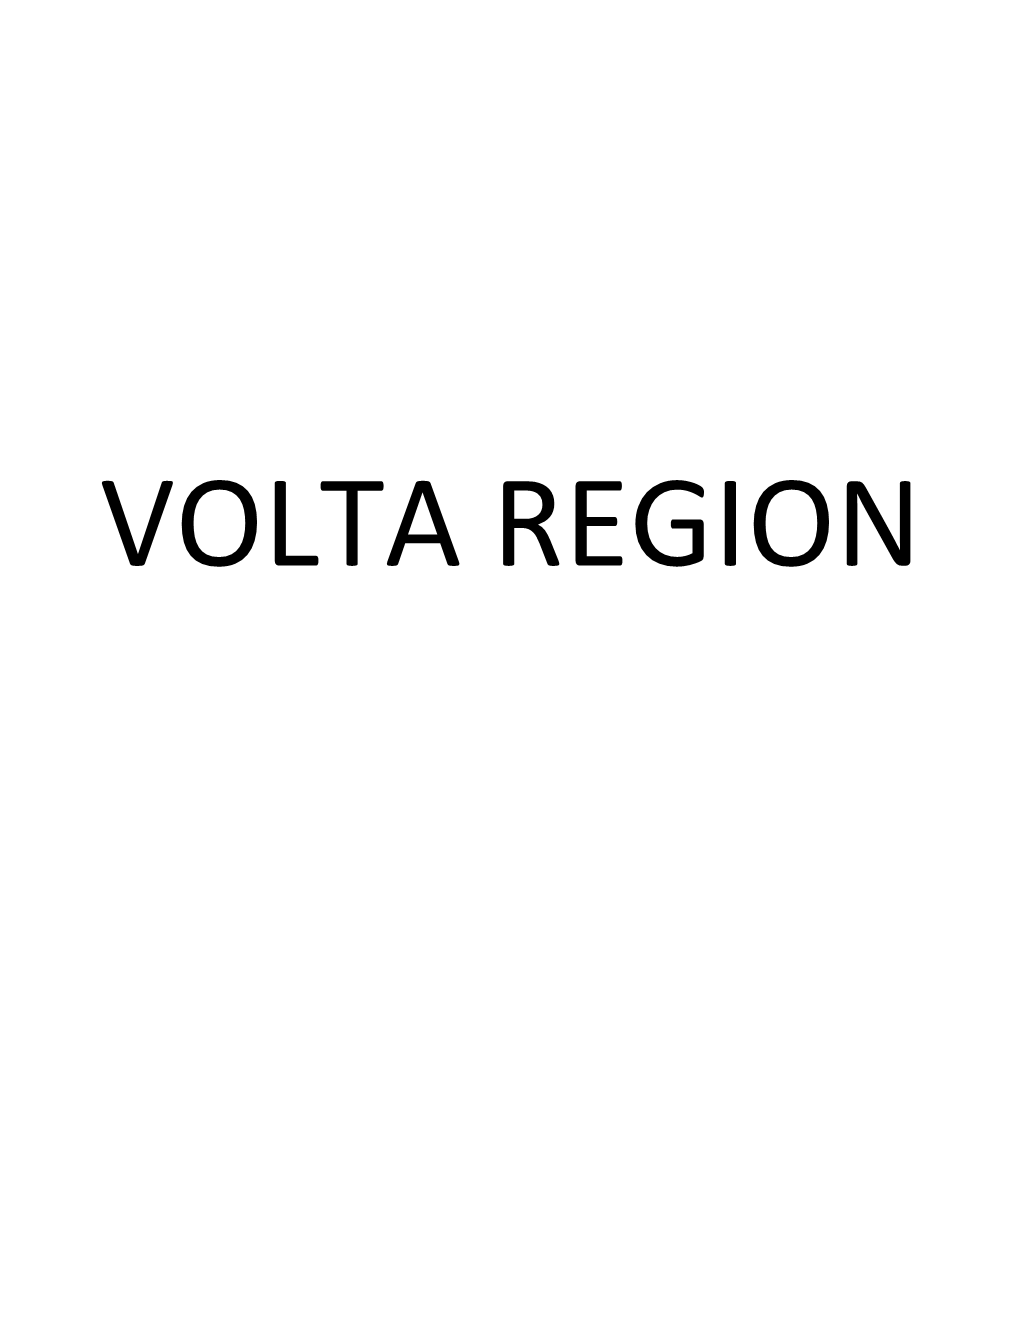 VOLTA REGION.Pdf